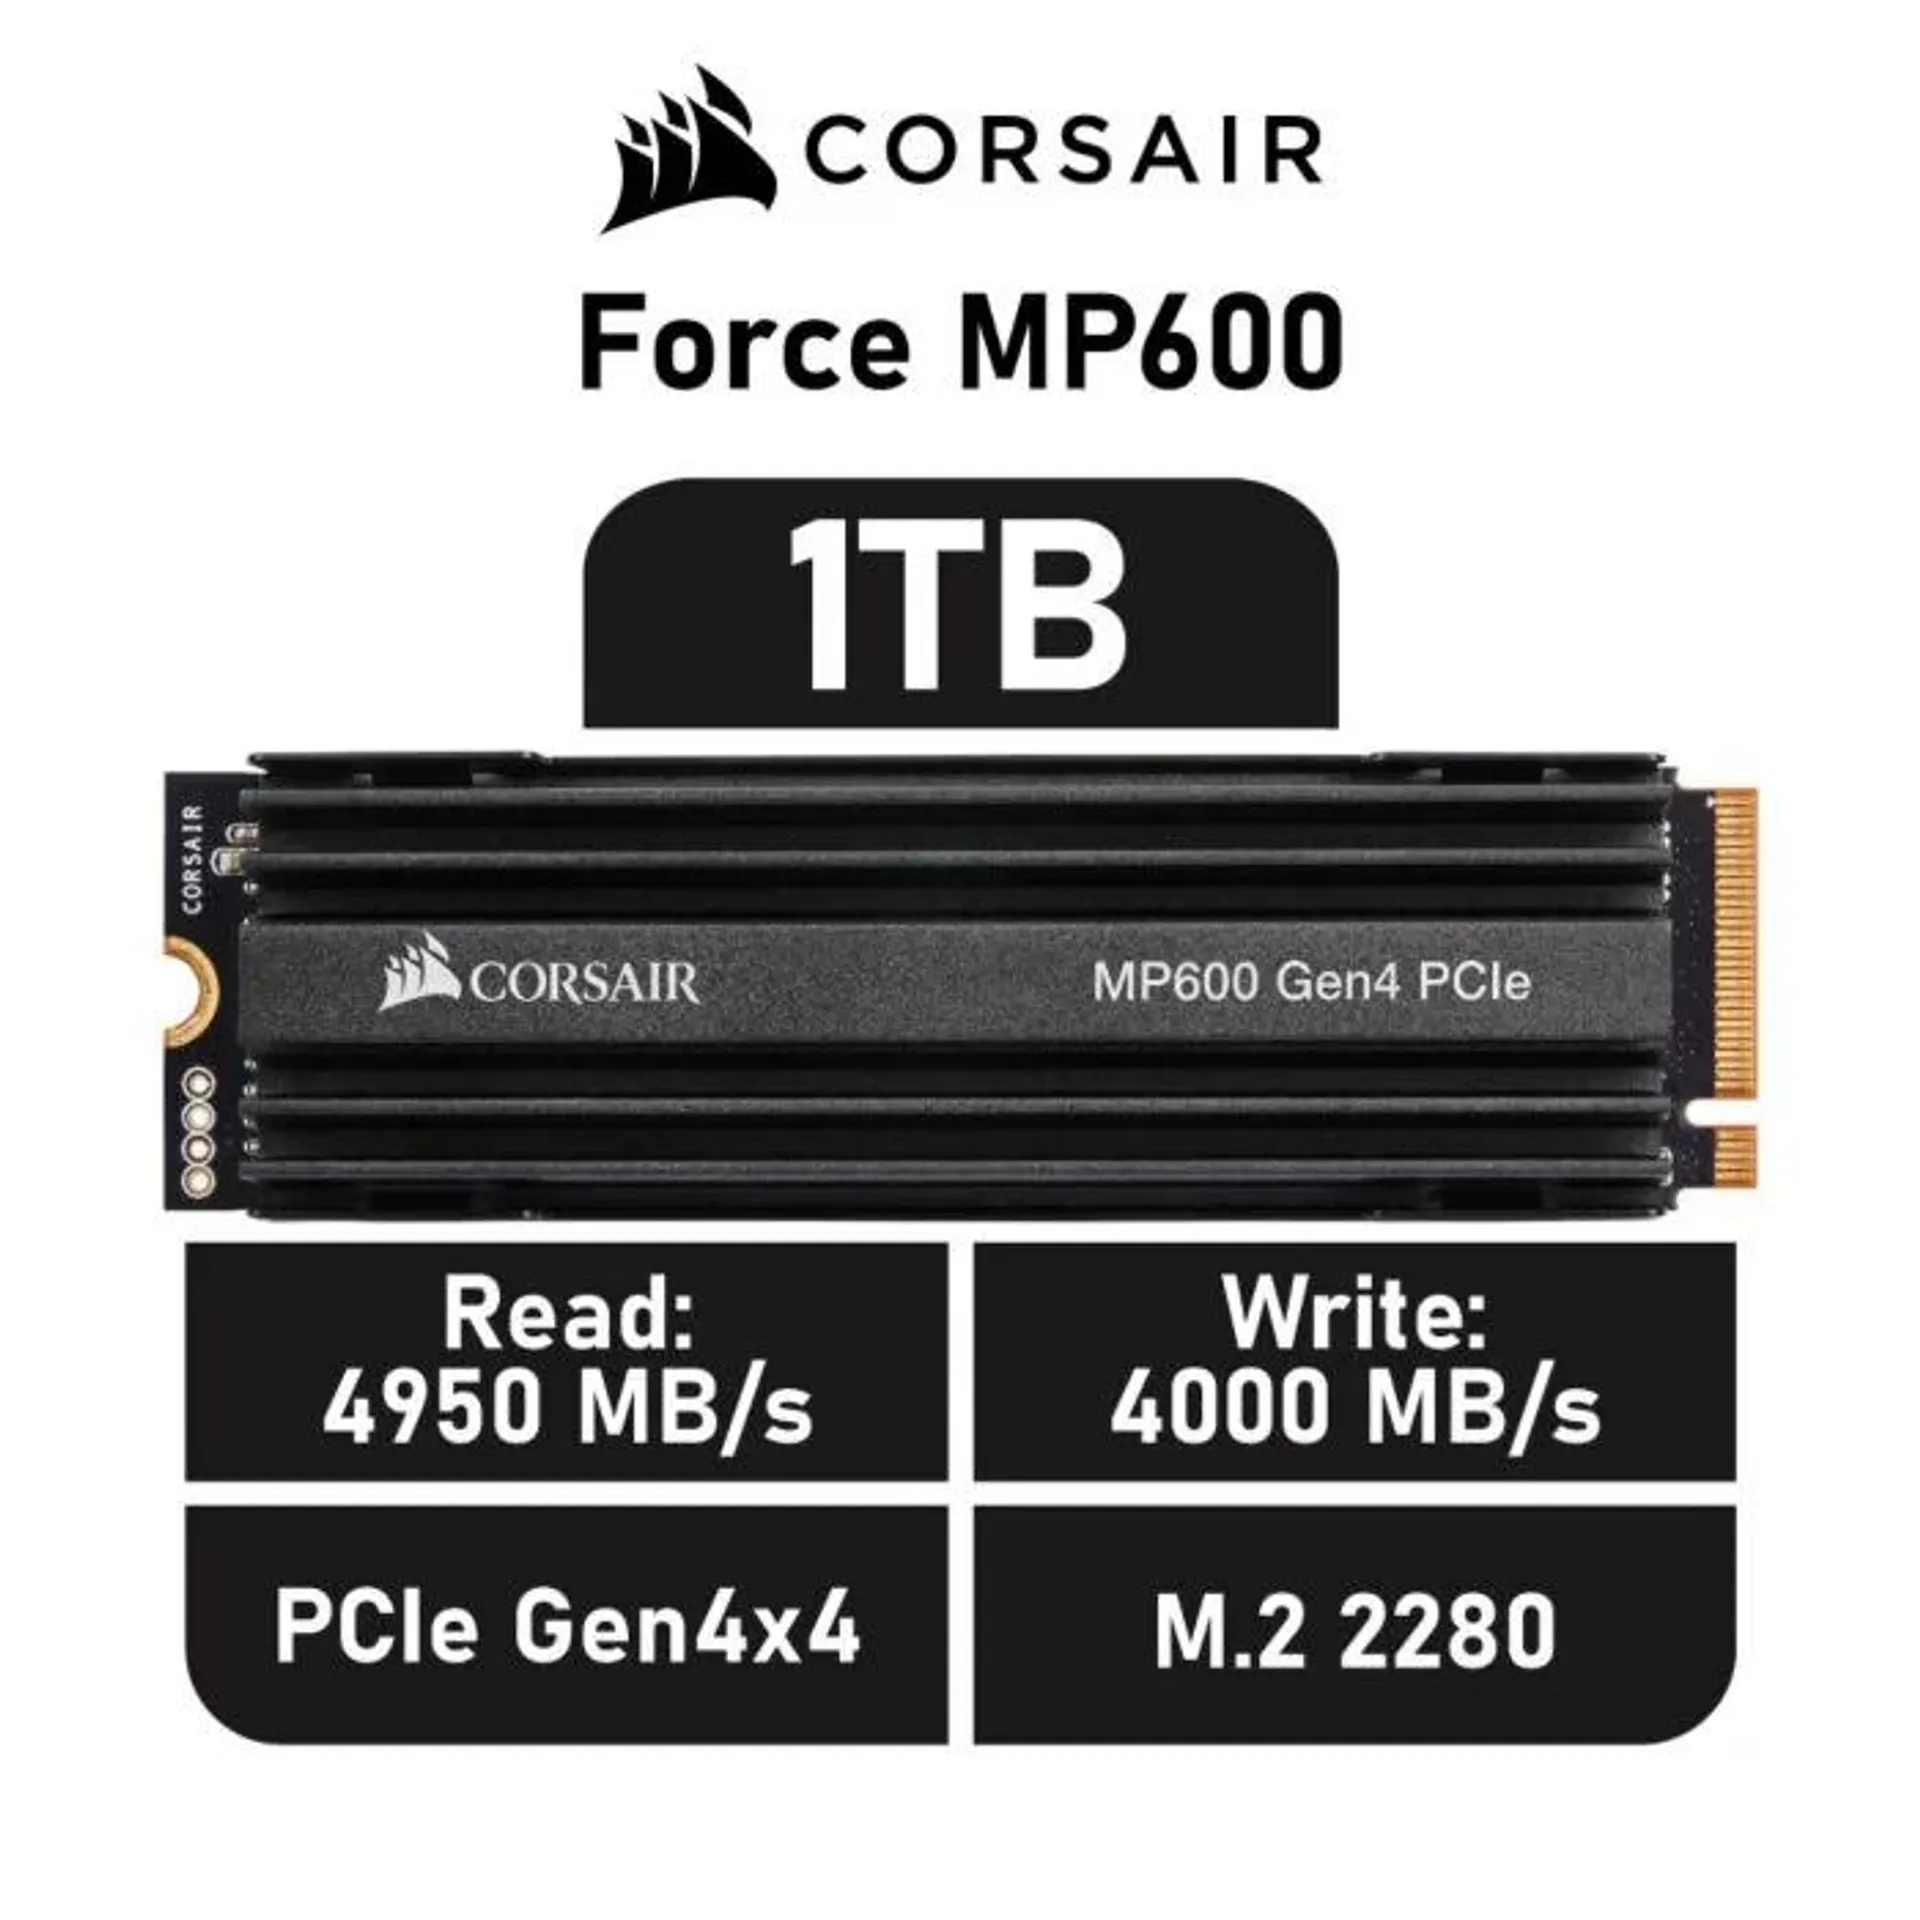 CORSAIR Force MP600 1TB PCIe Gen4x4 CSSD-F1000GBMP600R2 M.2 2280 Solid State Drive